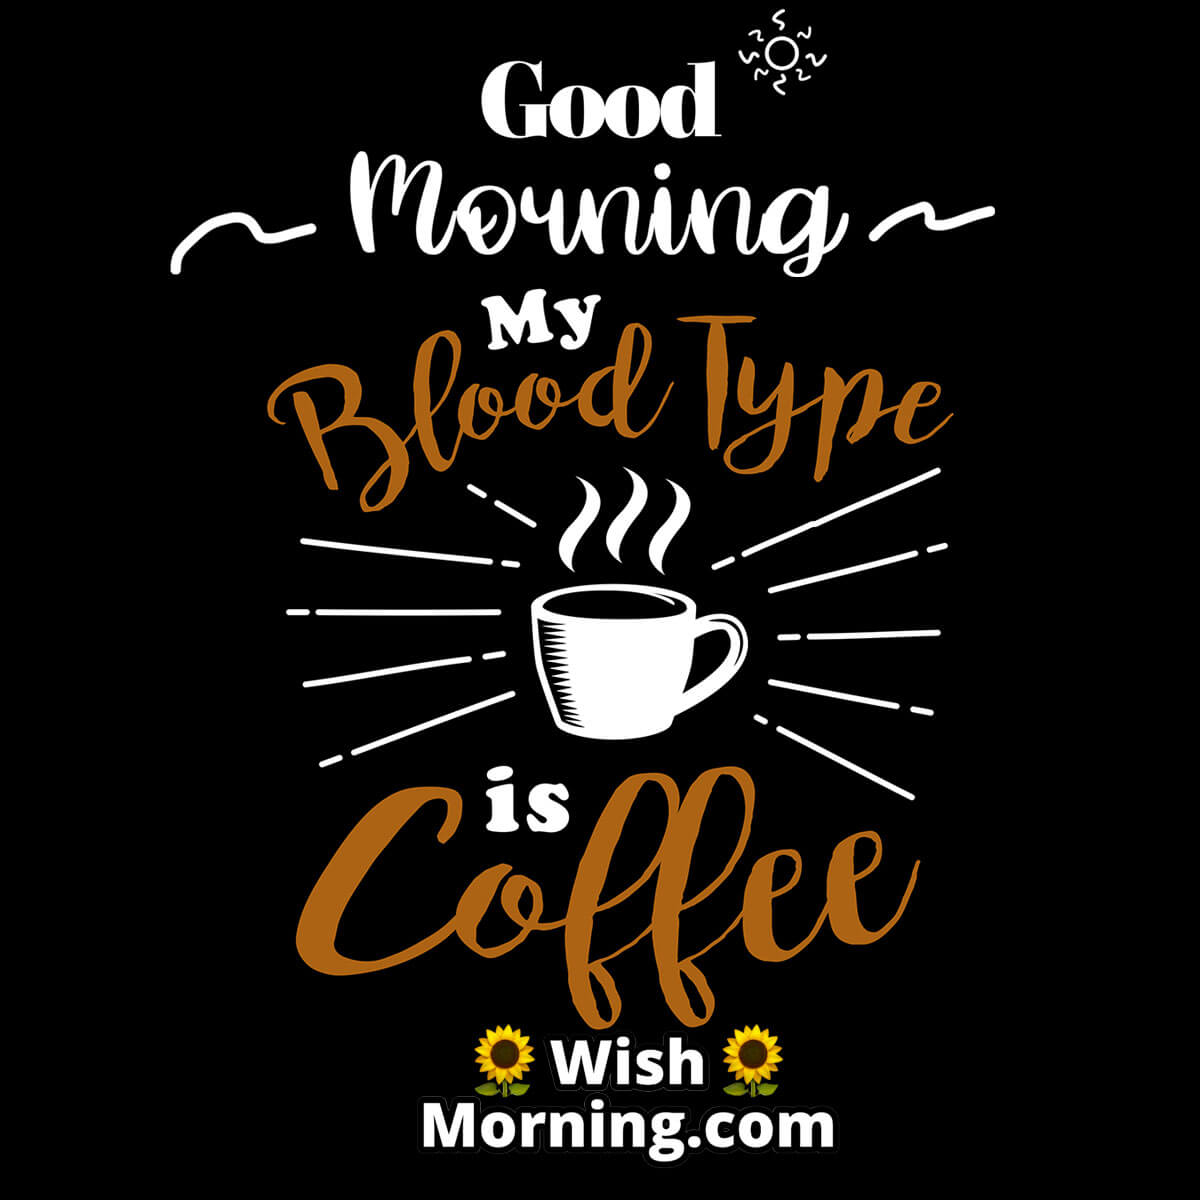 Good Morning Coffee Post